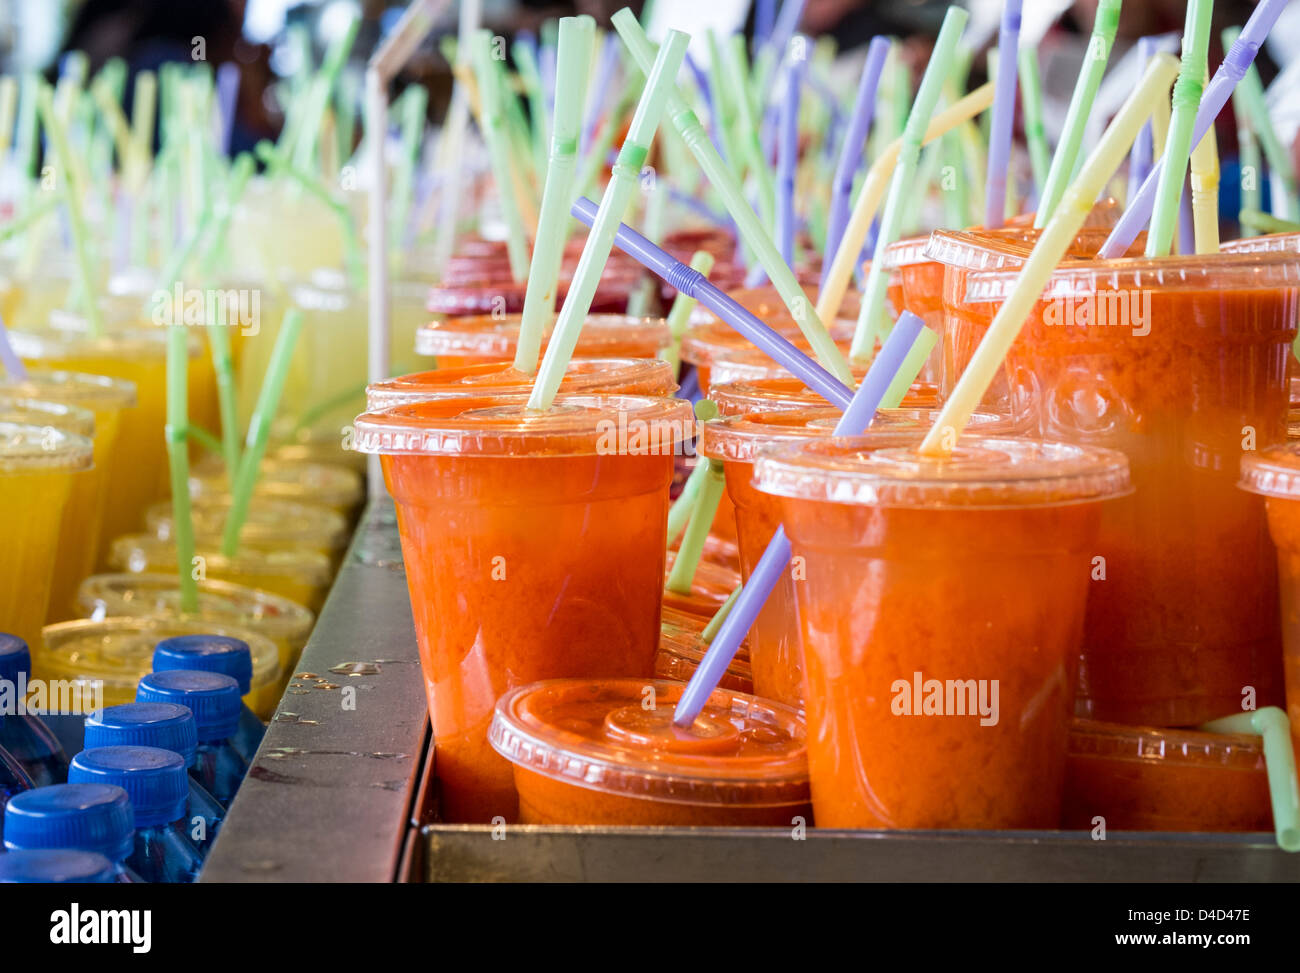 https://c8.alamy.com/comp/D4D47E/fresh-and-refreshing-fruit-juice-in-plastic-cups-D4D47E.jpg